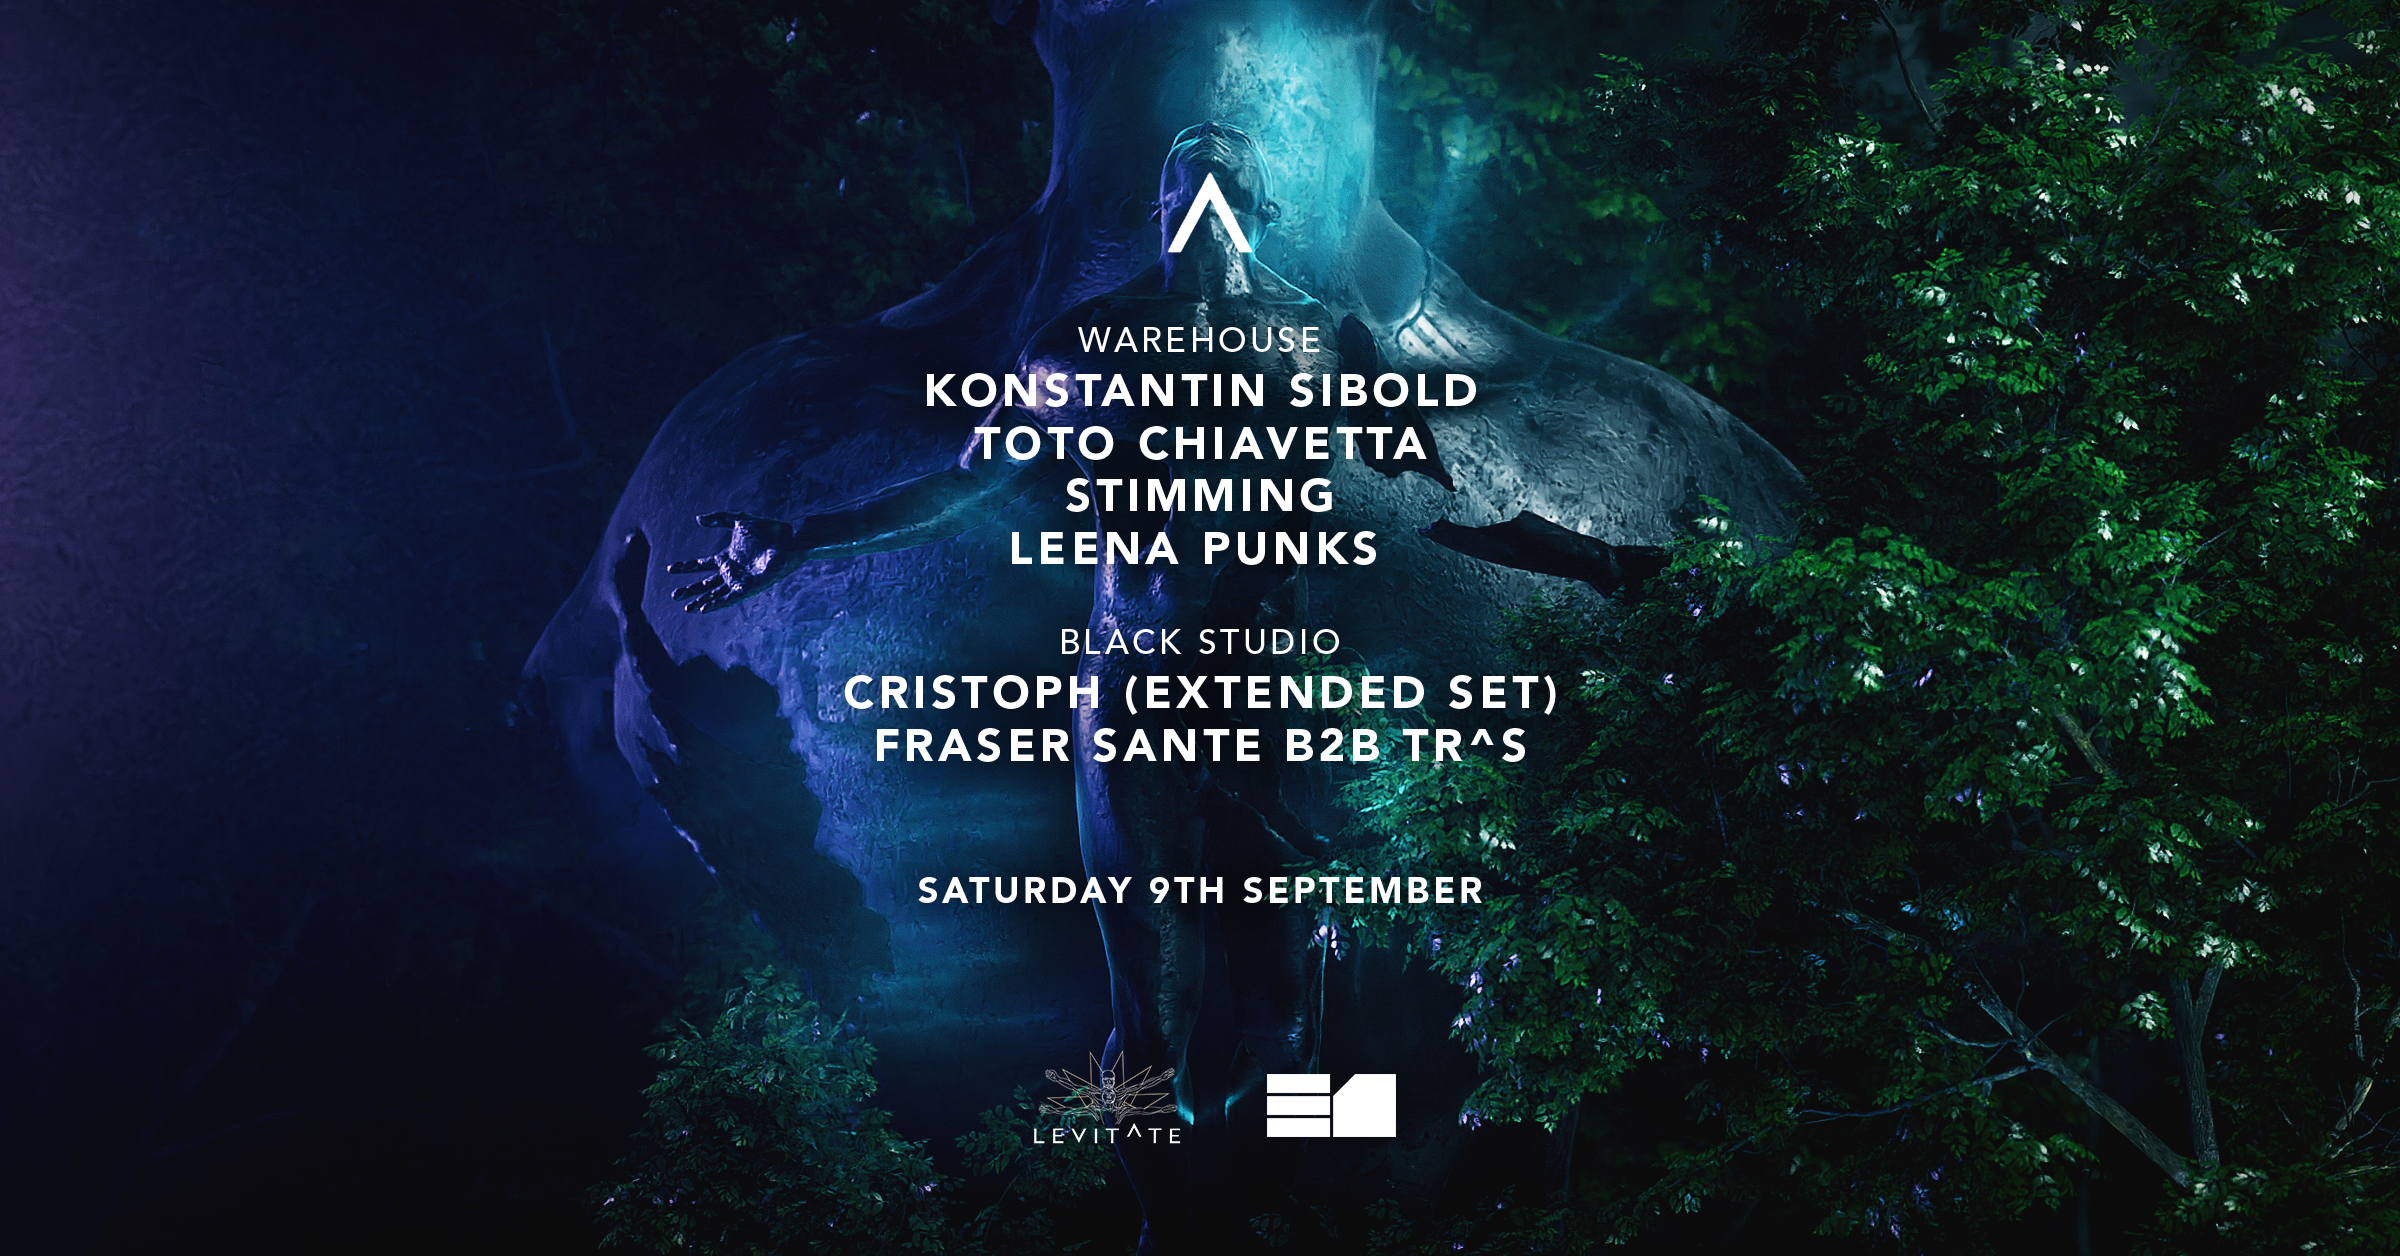 Levitate: Konstantin Sibold, Cristoph (extended set), Toto Chiavetta & Stimming E1